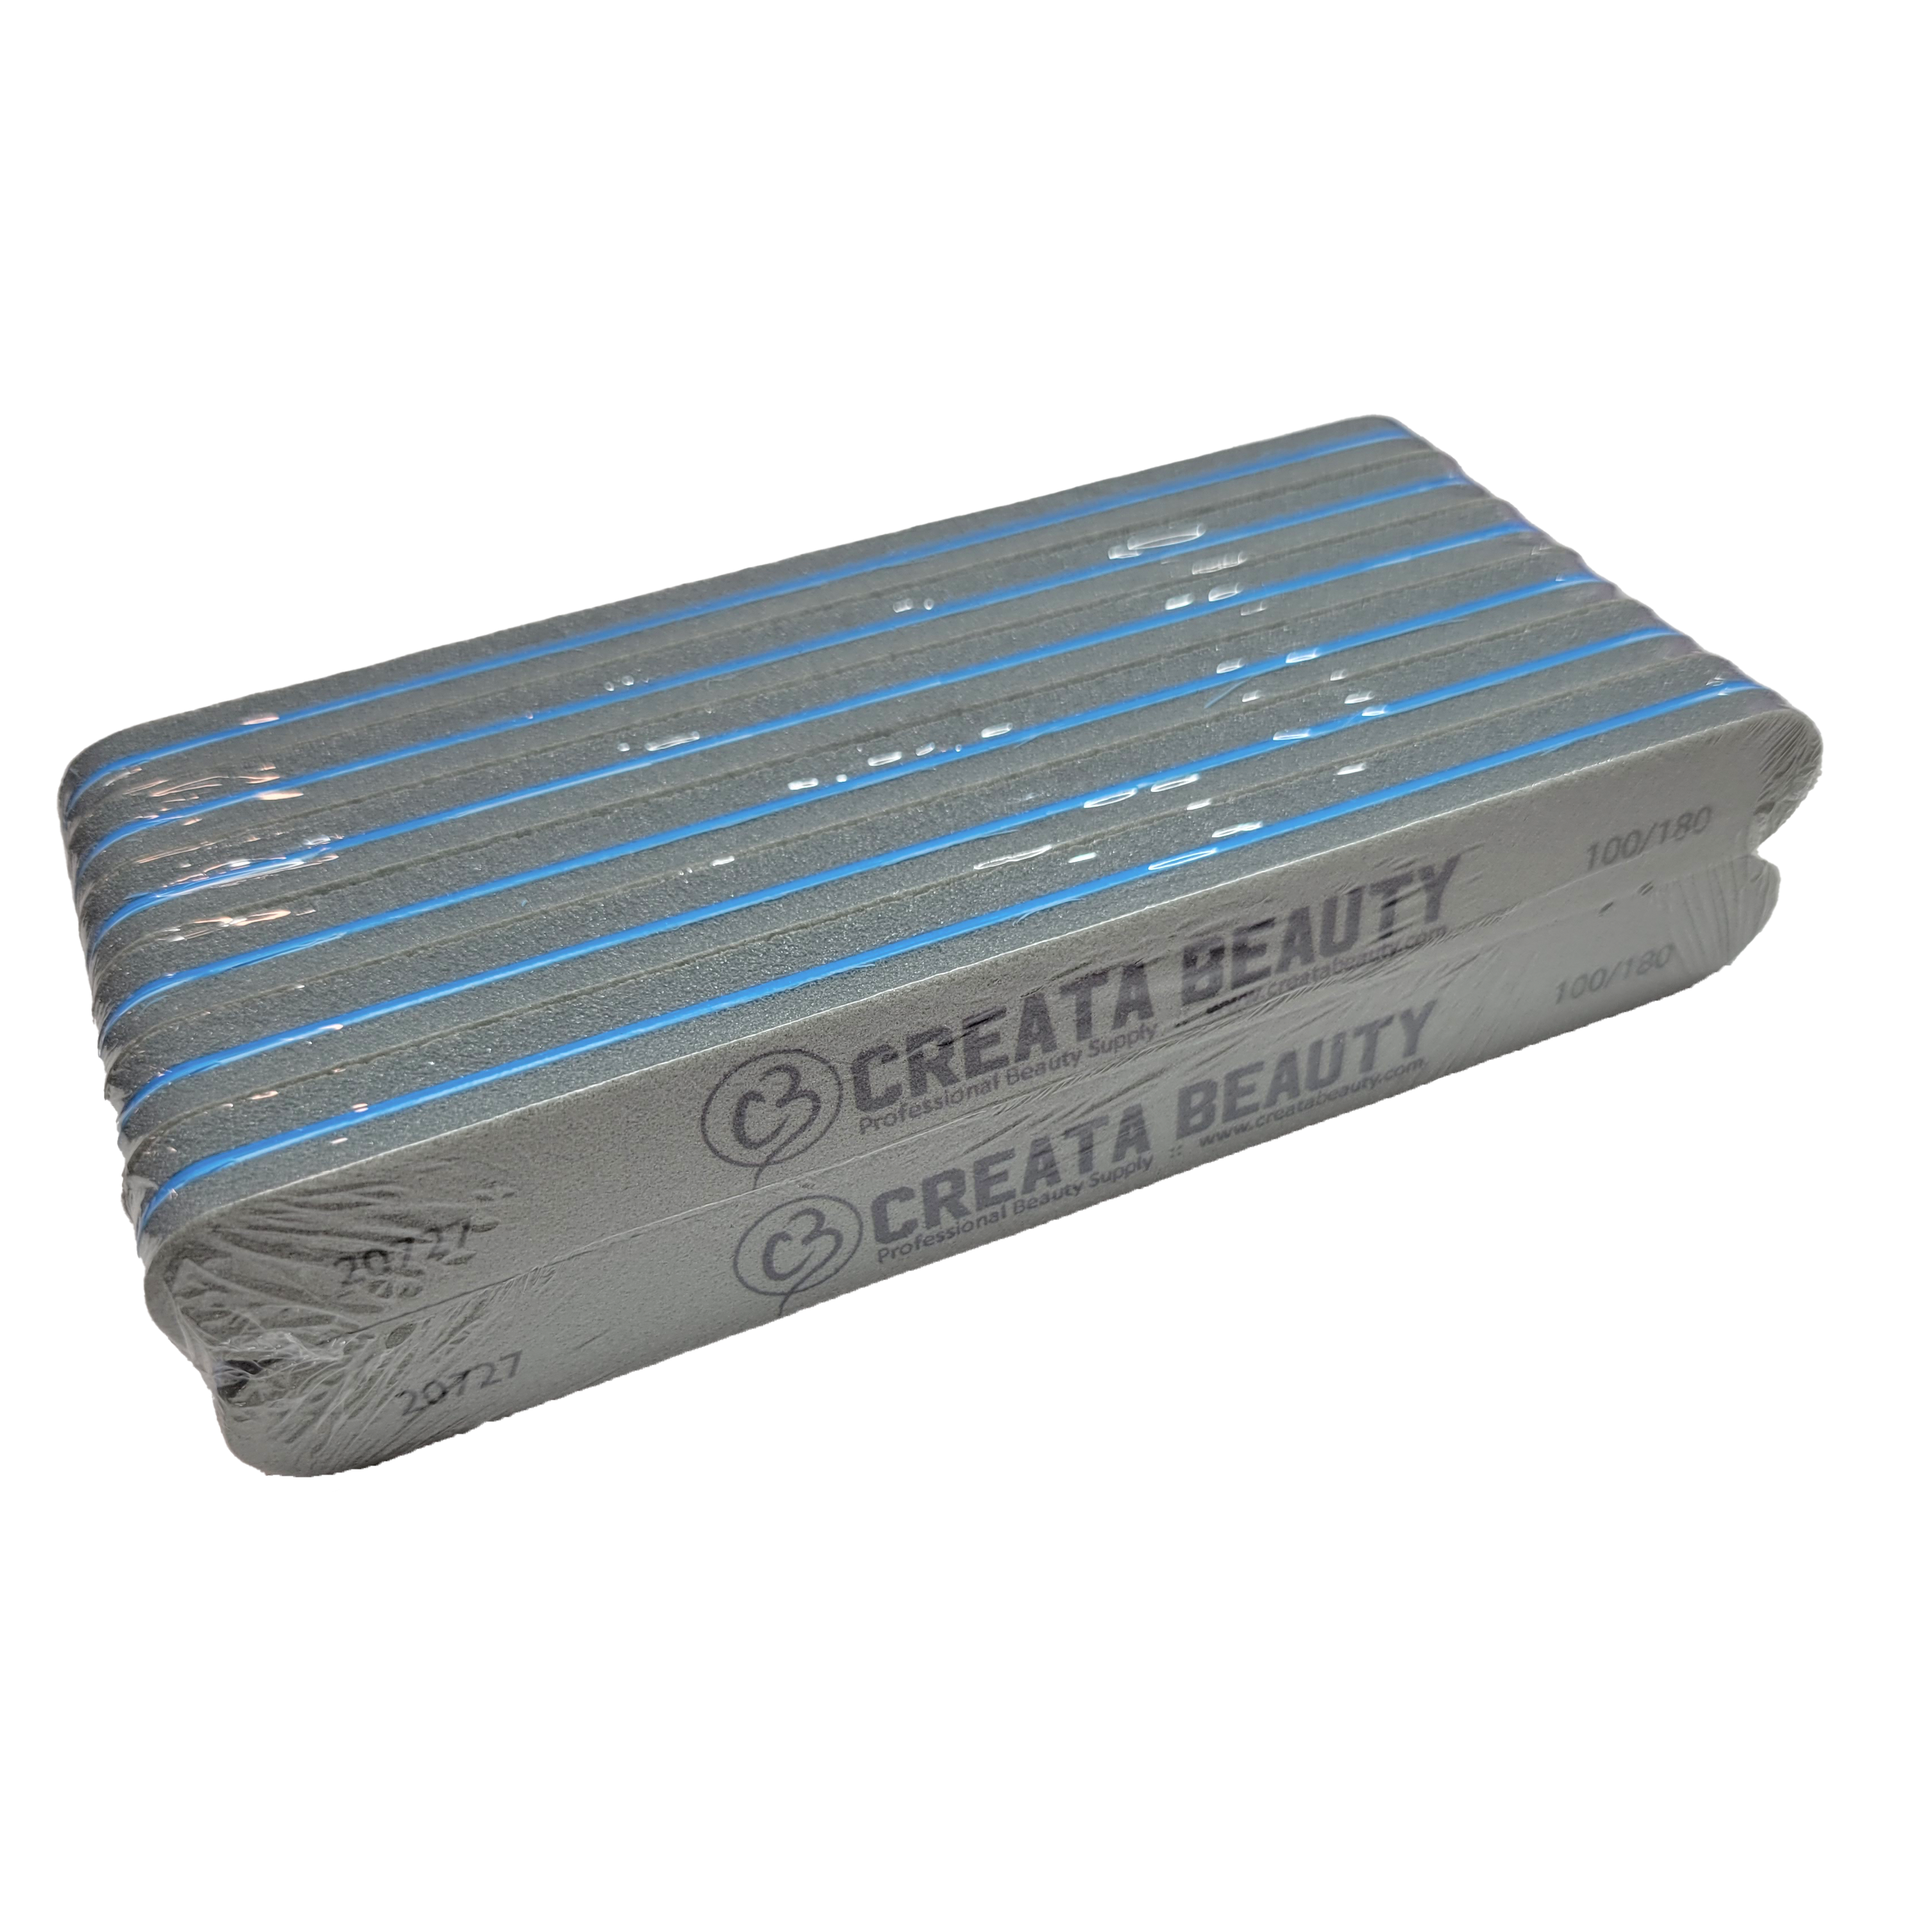 Creata Beauty - Grey Sponge Buffer (Blue Center) 12pk - Creata Beauty - Professional Beauty Products